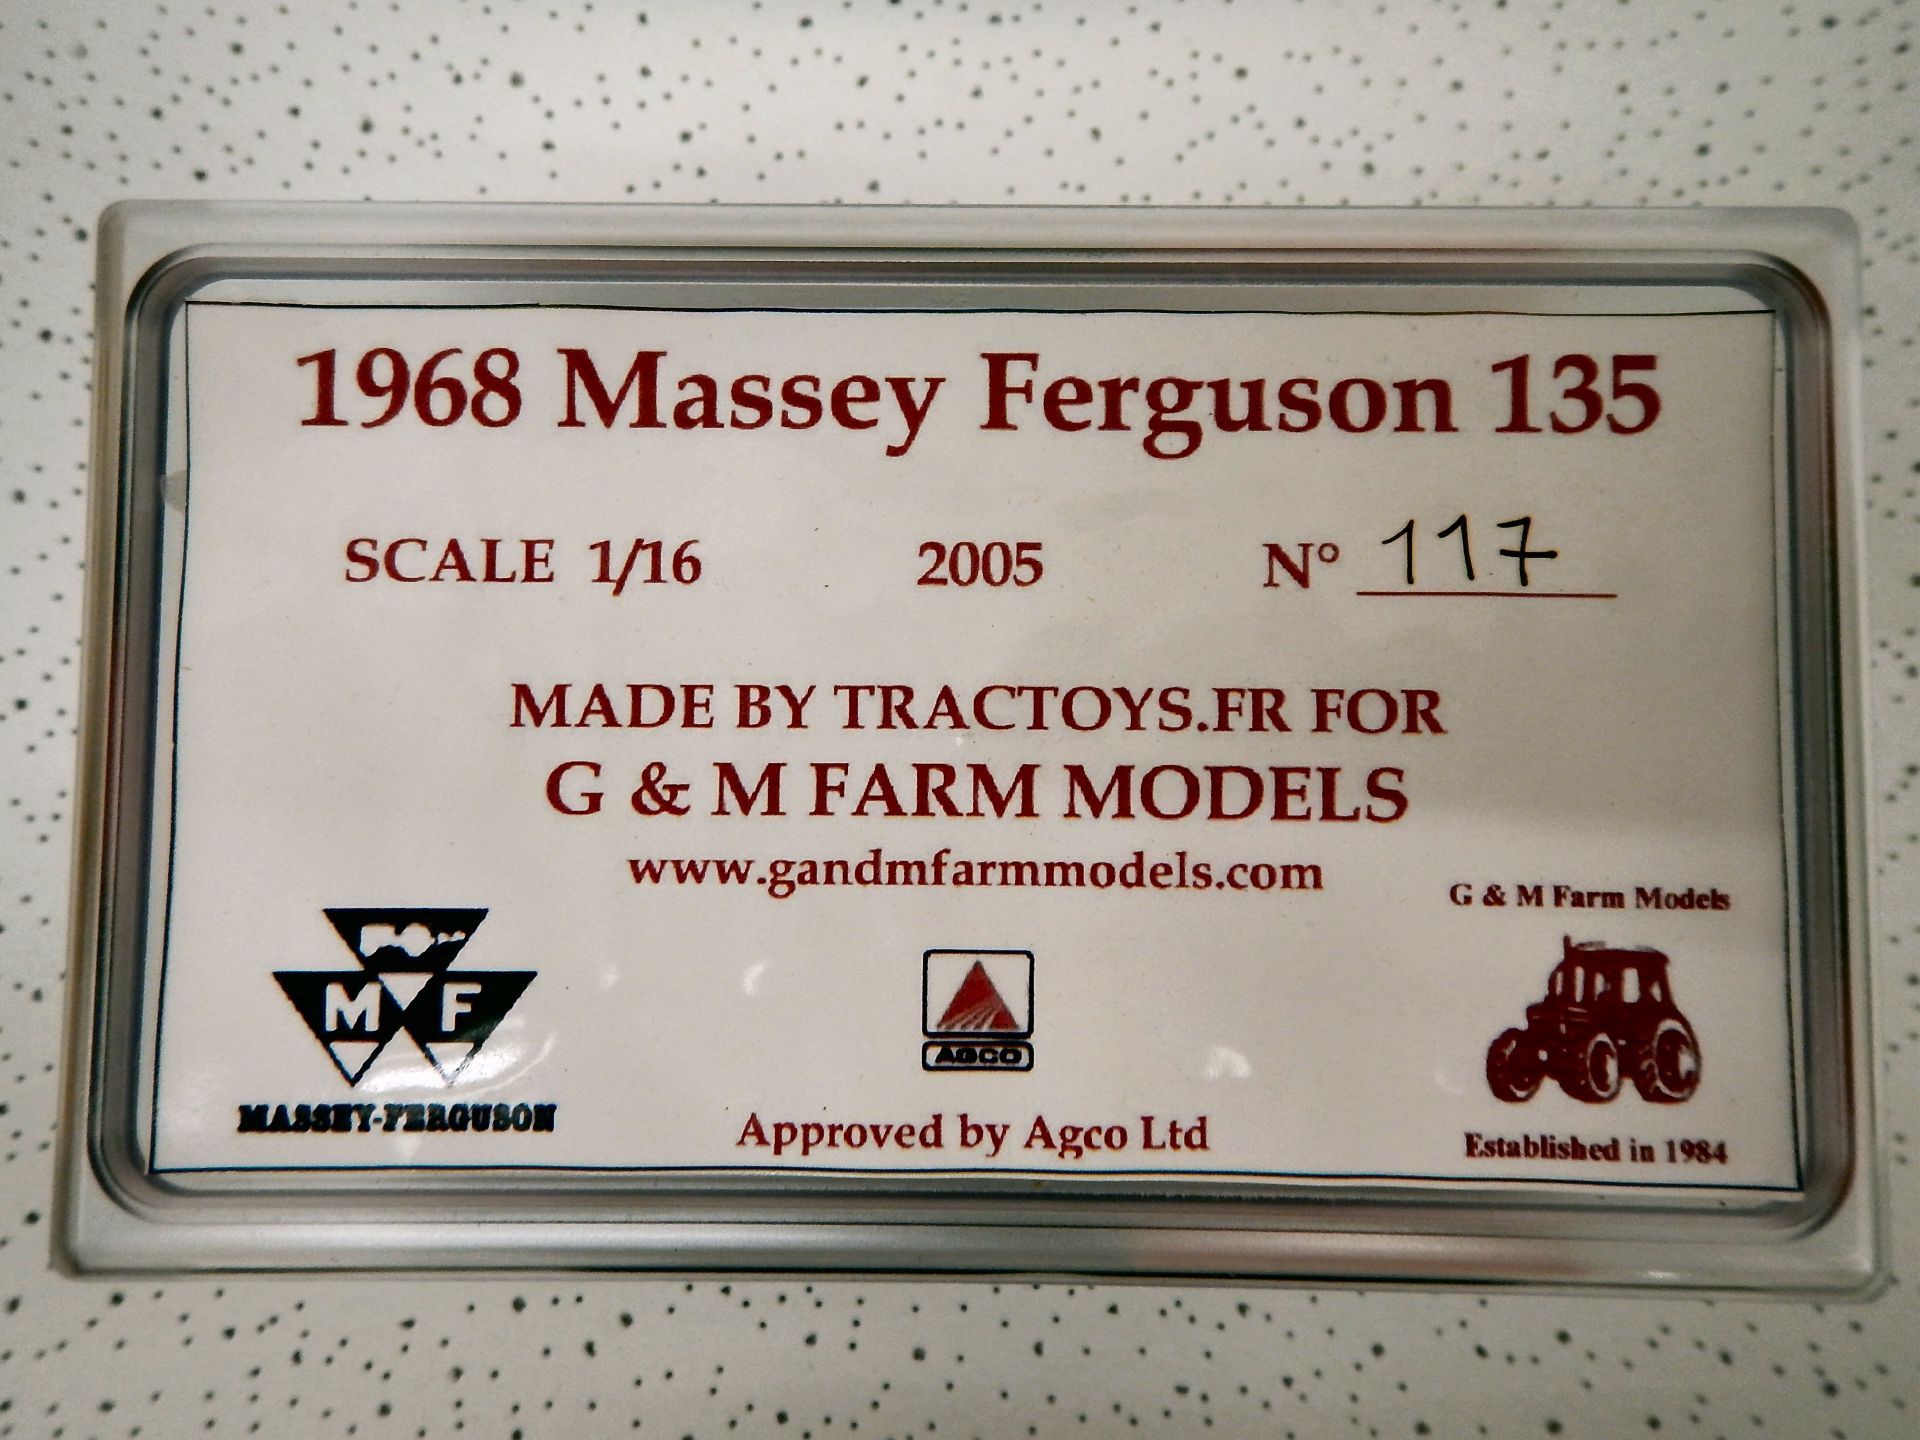 Tractoys (G & M Farm Models) 1968 Massey Ferguson 135 1/16 scale model, boxed 2005 build no.117 - Image 2 of 2